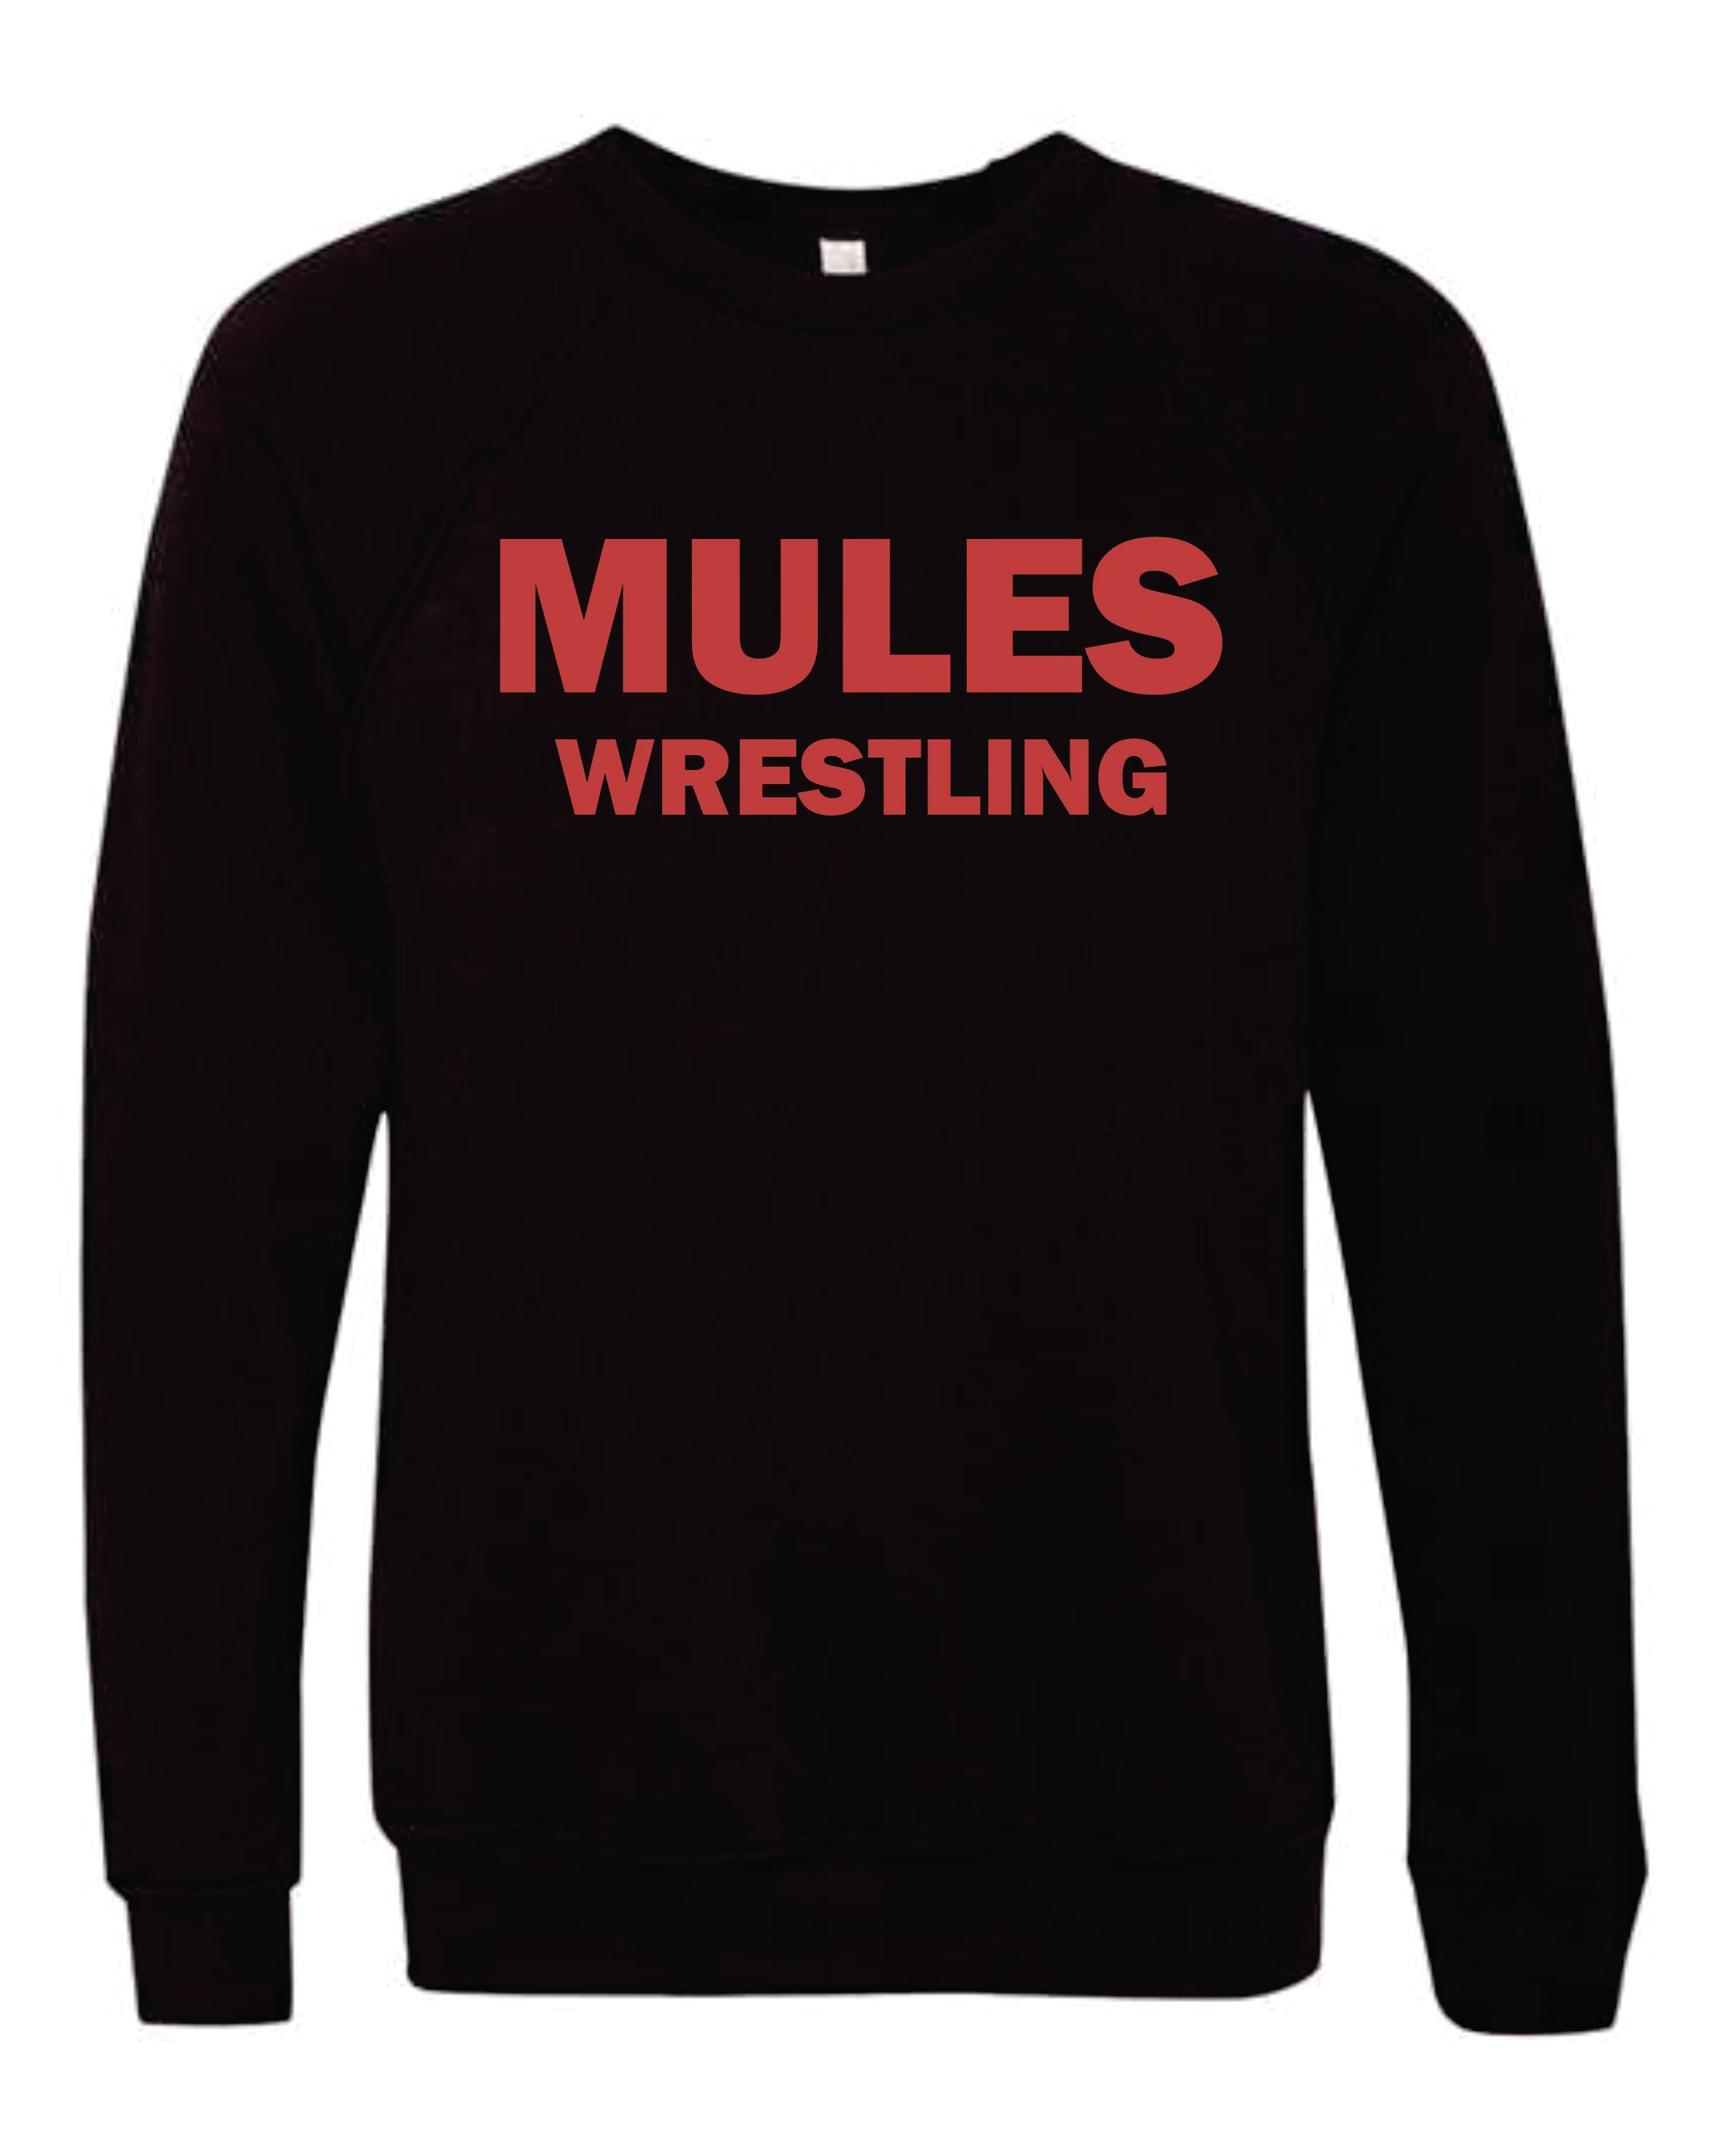 Mules Wrestling Black Crewneck